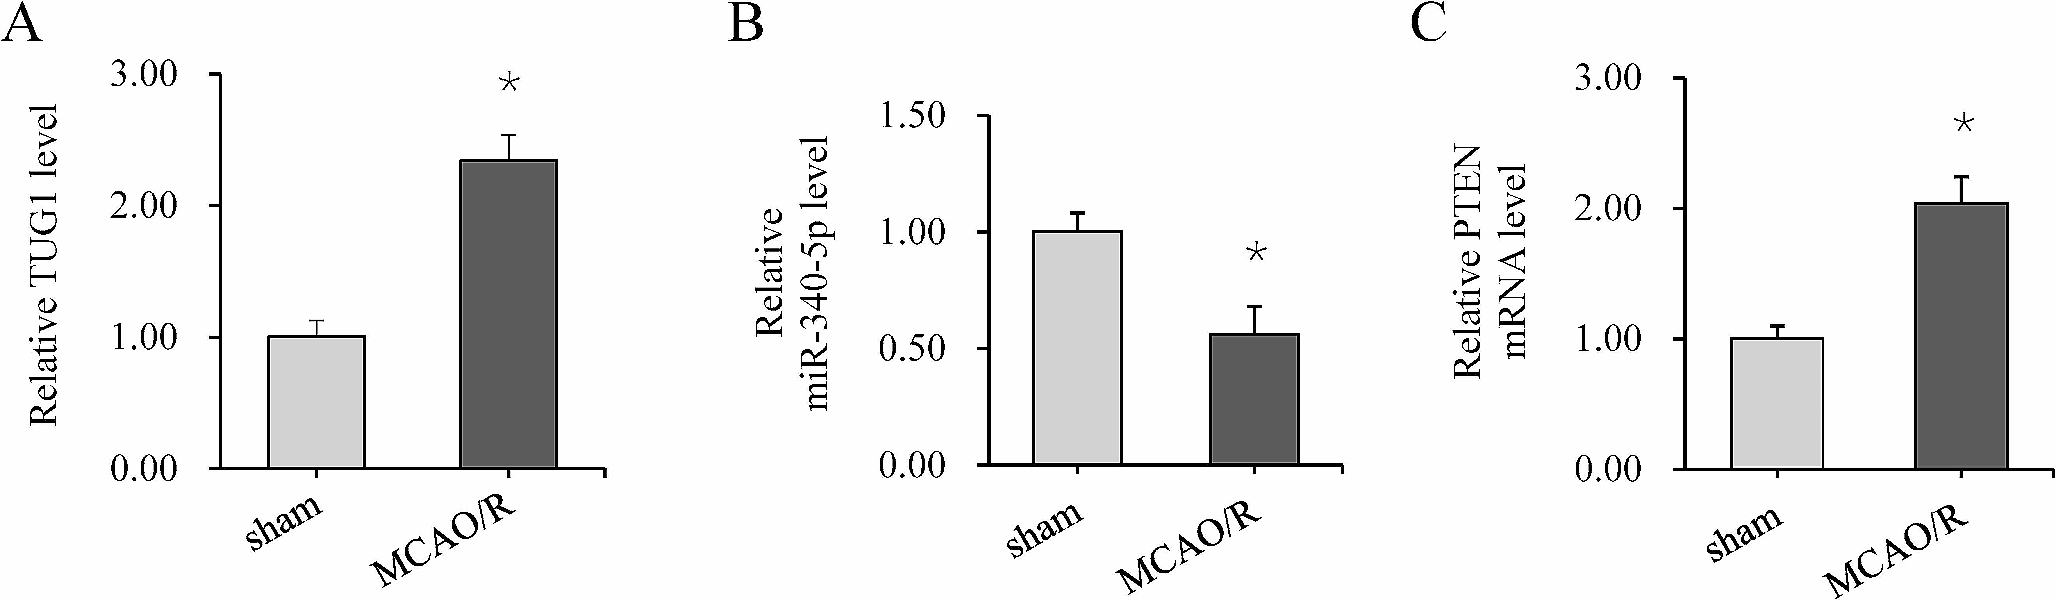 TUG1 exacerbates cerebral ischemia-reperfusion injury through miR-340-5p-mediated PTEN